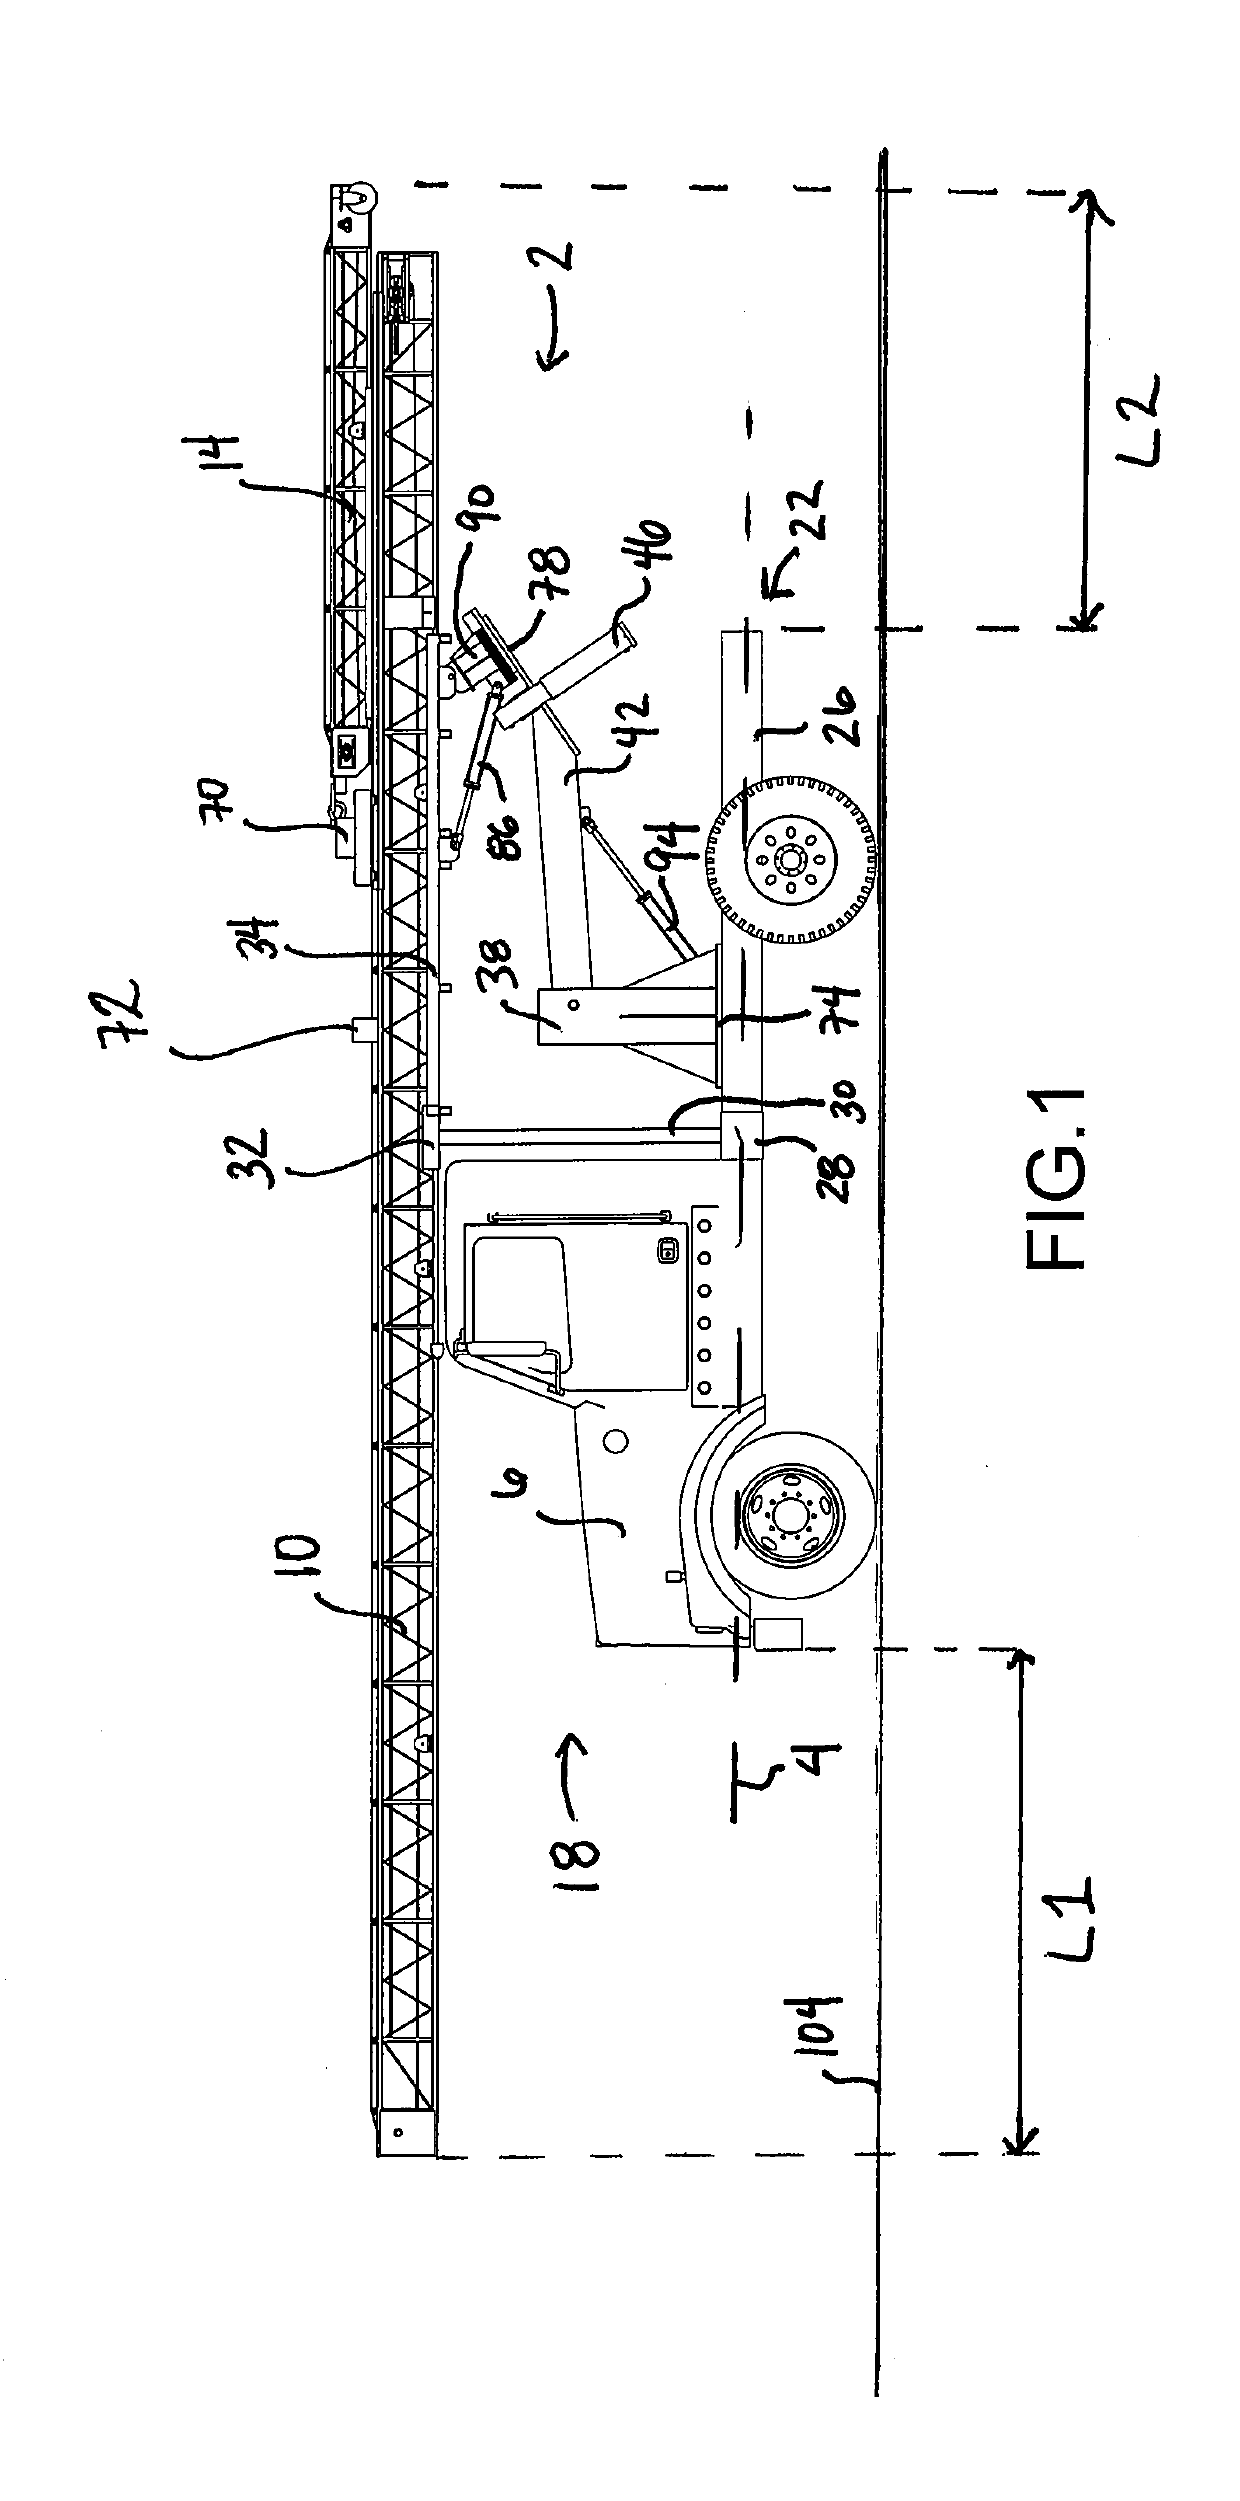 Vehicle-mounted conveyor system